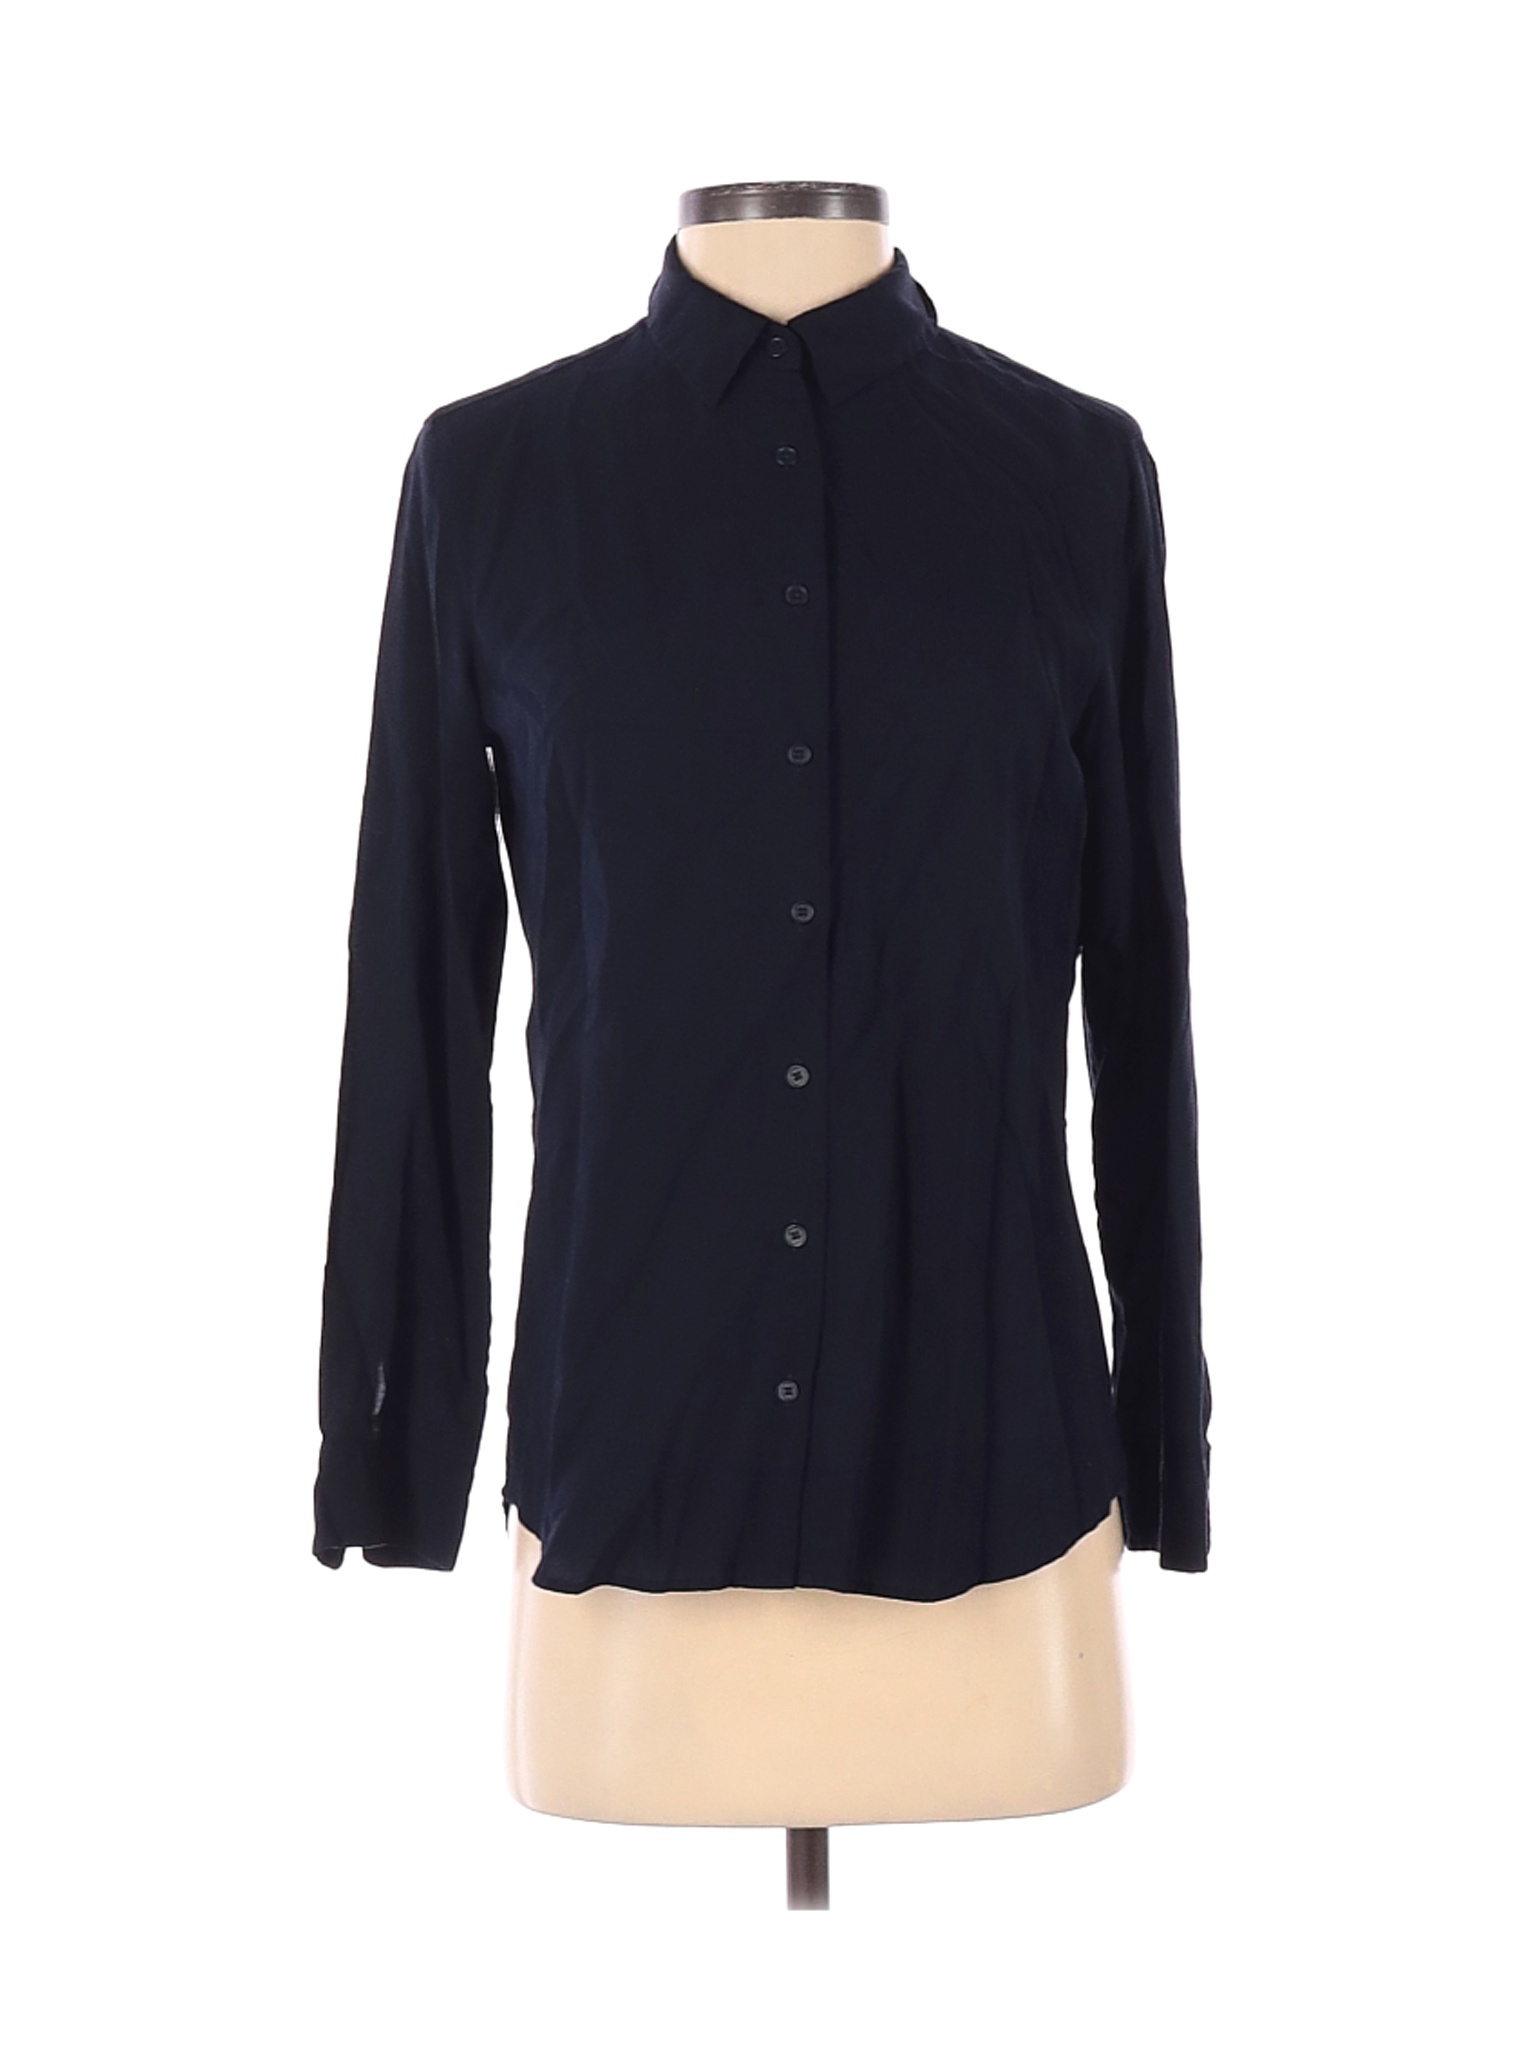 Uniqlo Women Black Long Sleeve Blouse XS | eBay